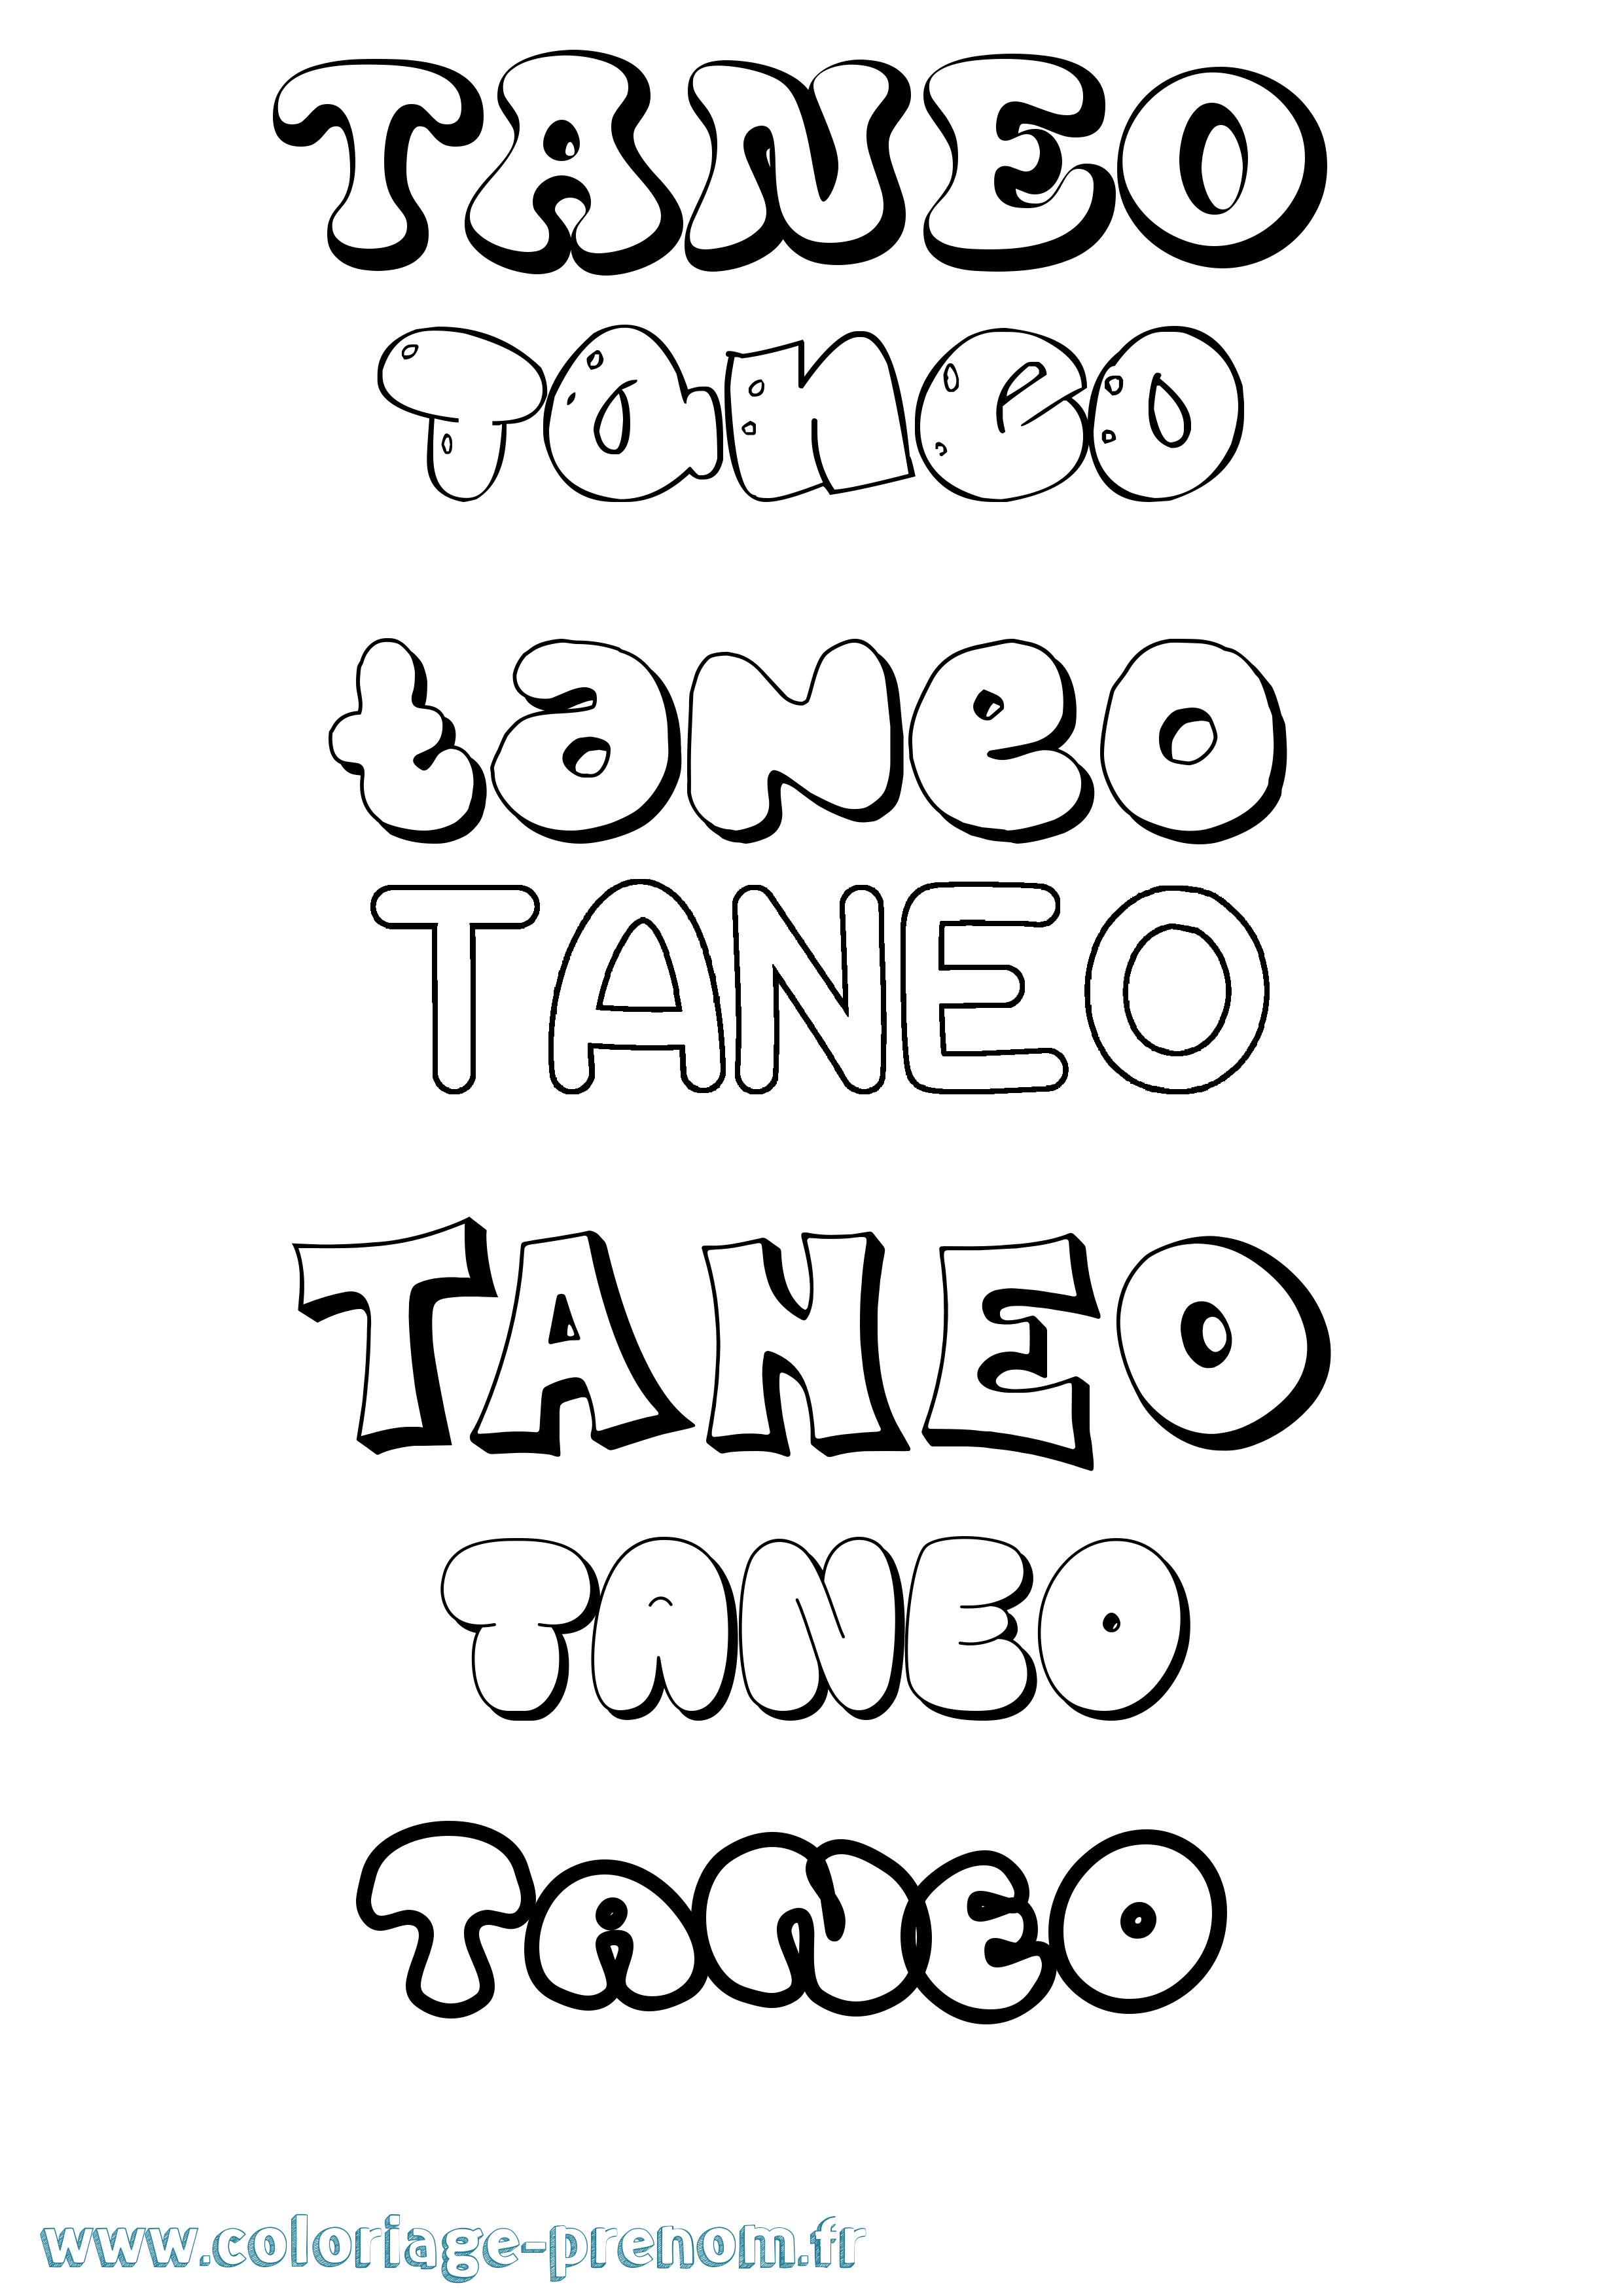 Coloriage prénom Taneo Bubble